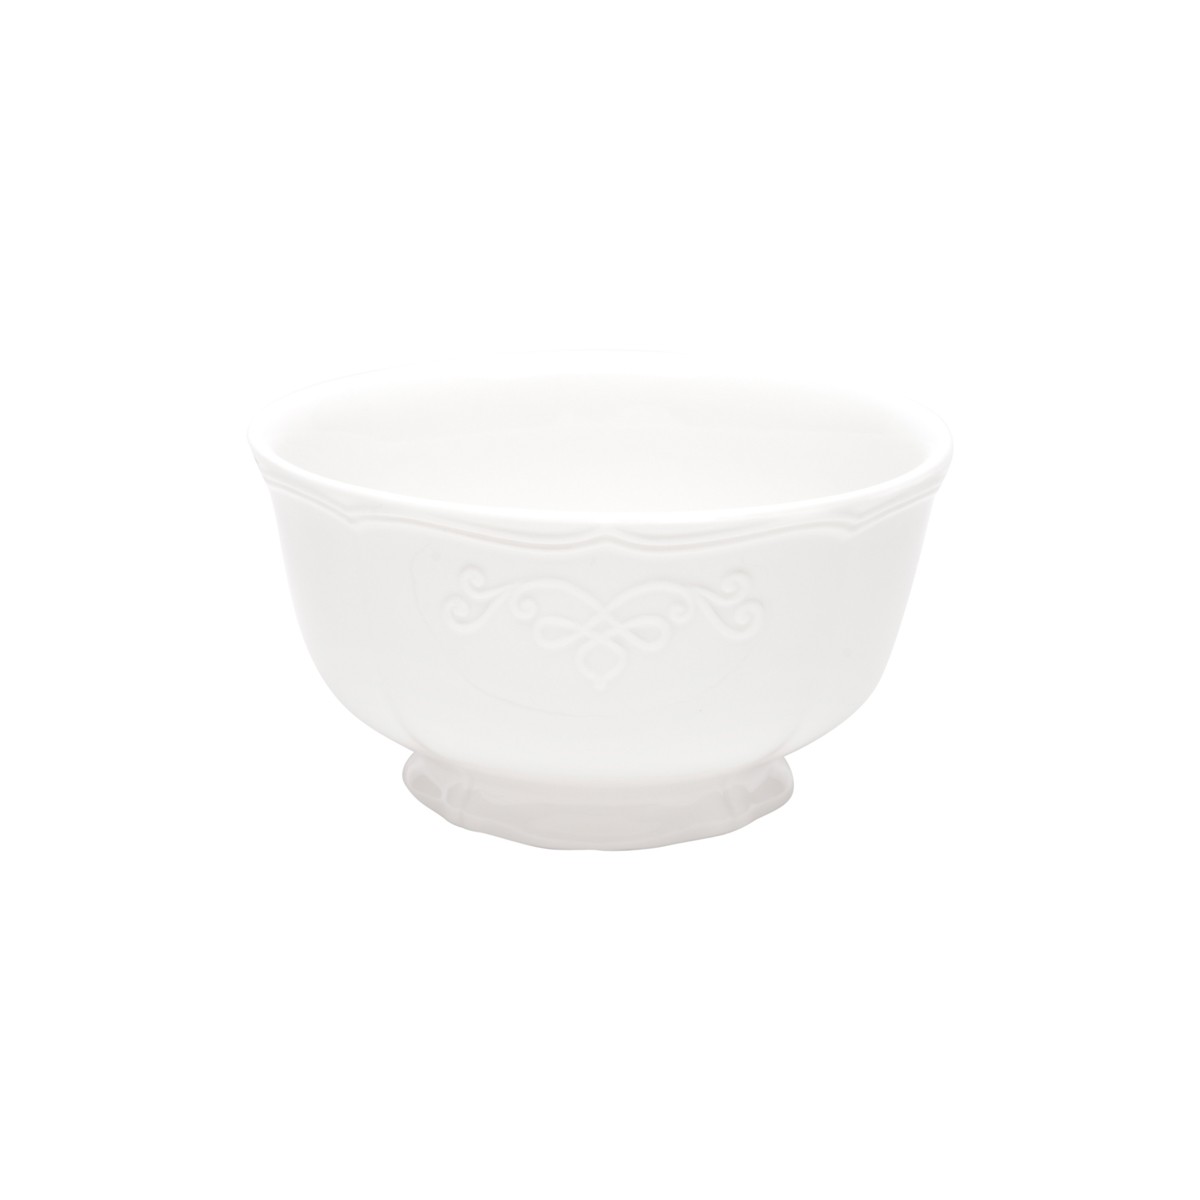 Cj 6 Bowls De Porcelana Super White Genebra 10 x 5,5cm